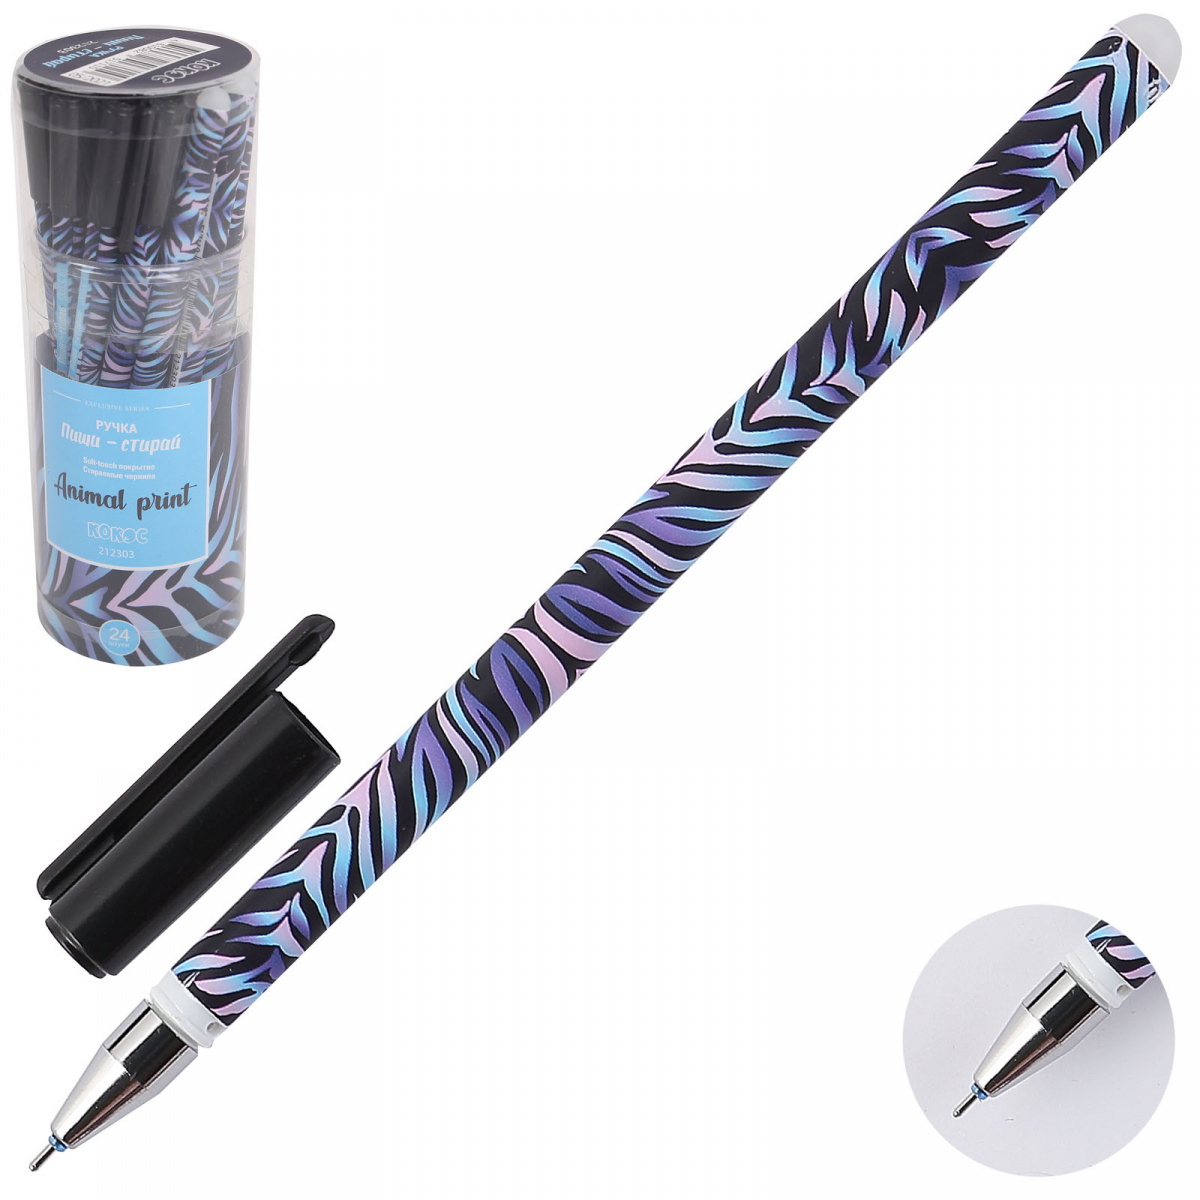 Ручка гелевая "Animal Print", пиши-стирай, синяя